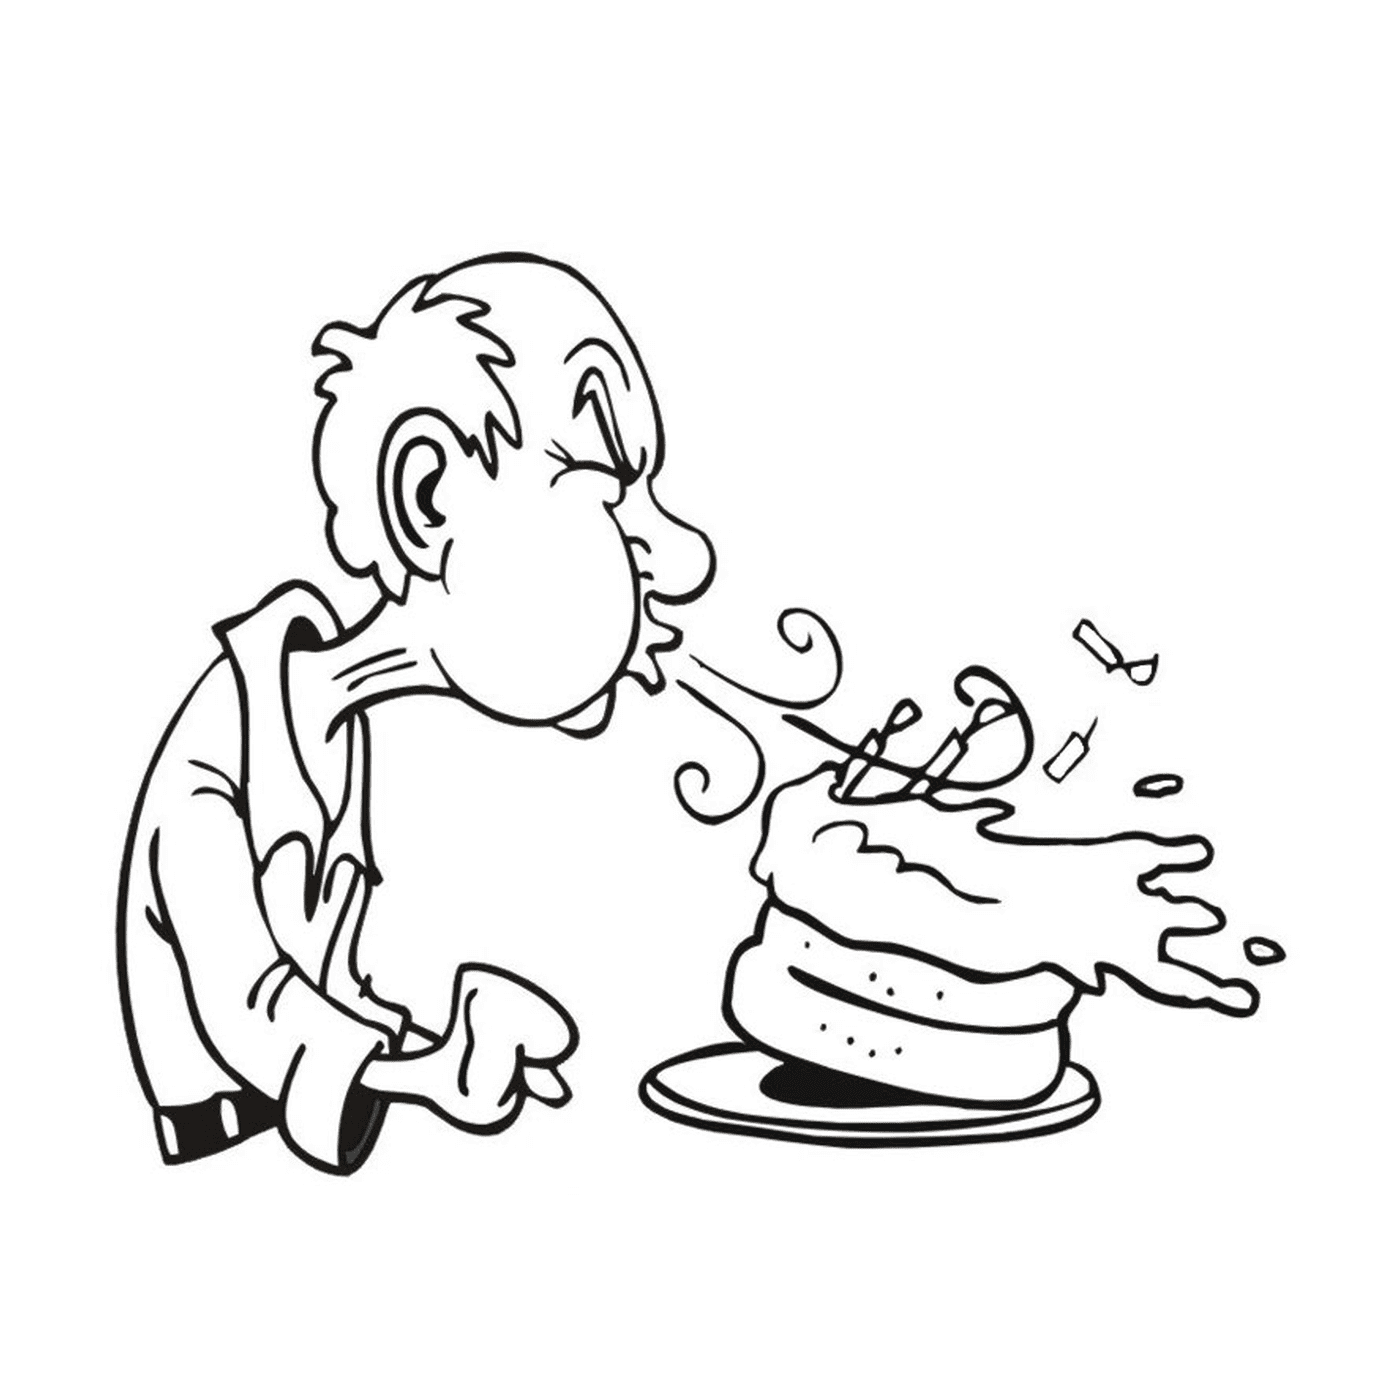  un uomo che soffia una candela su una torta 